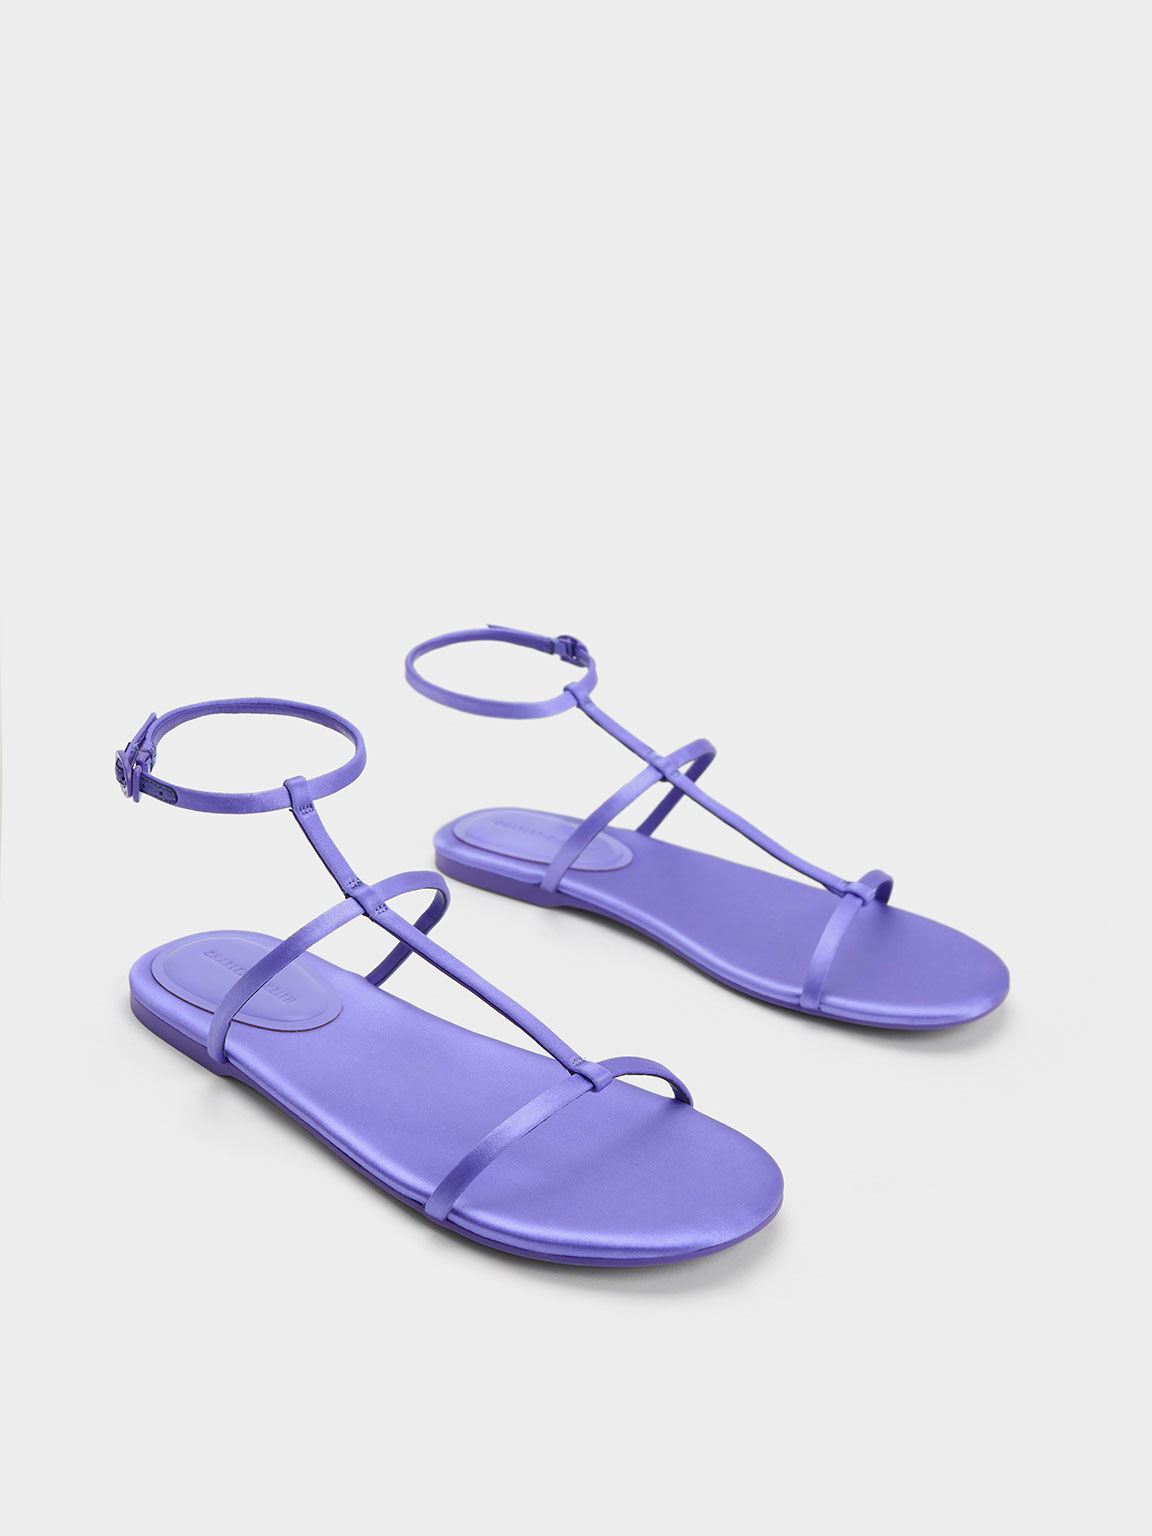 Lib Italian Heels Ankle Straps Peep Toe Platform Patent Stiletto Sandals - Light  Purple in Sexy Heels & Platforms - $104.72